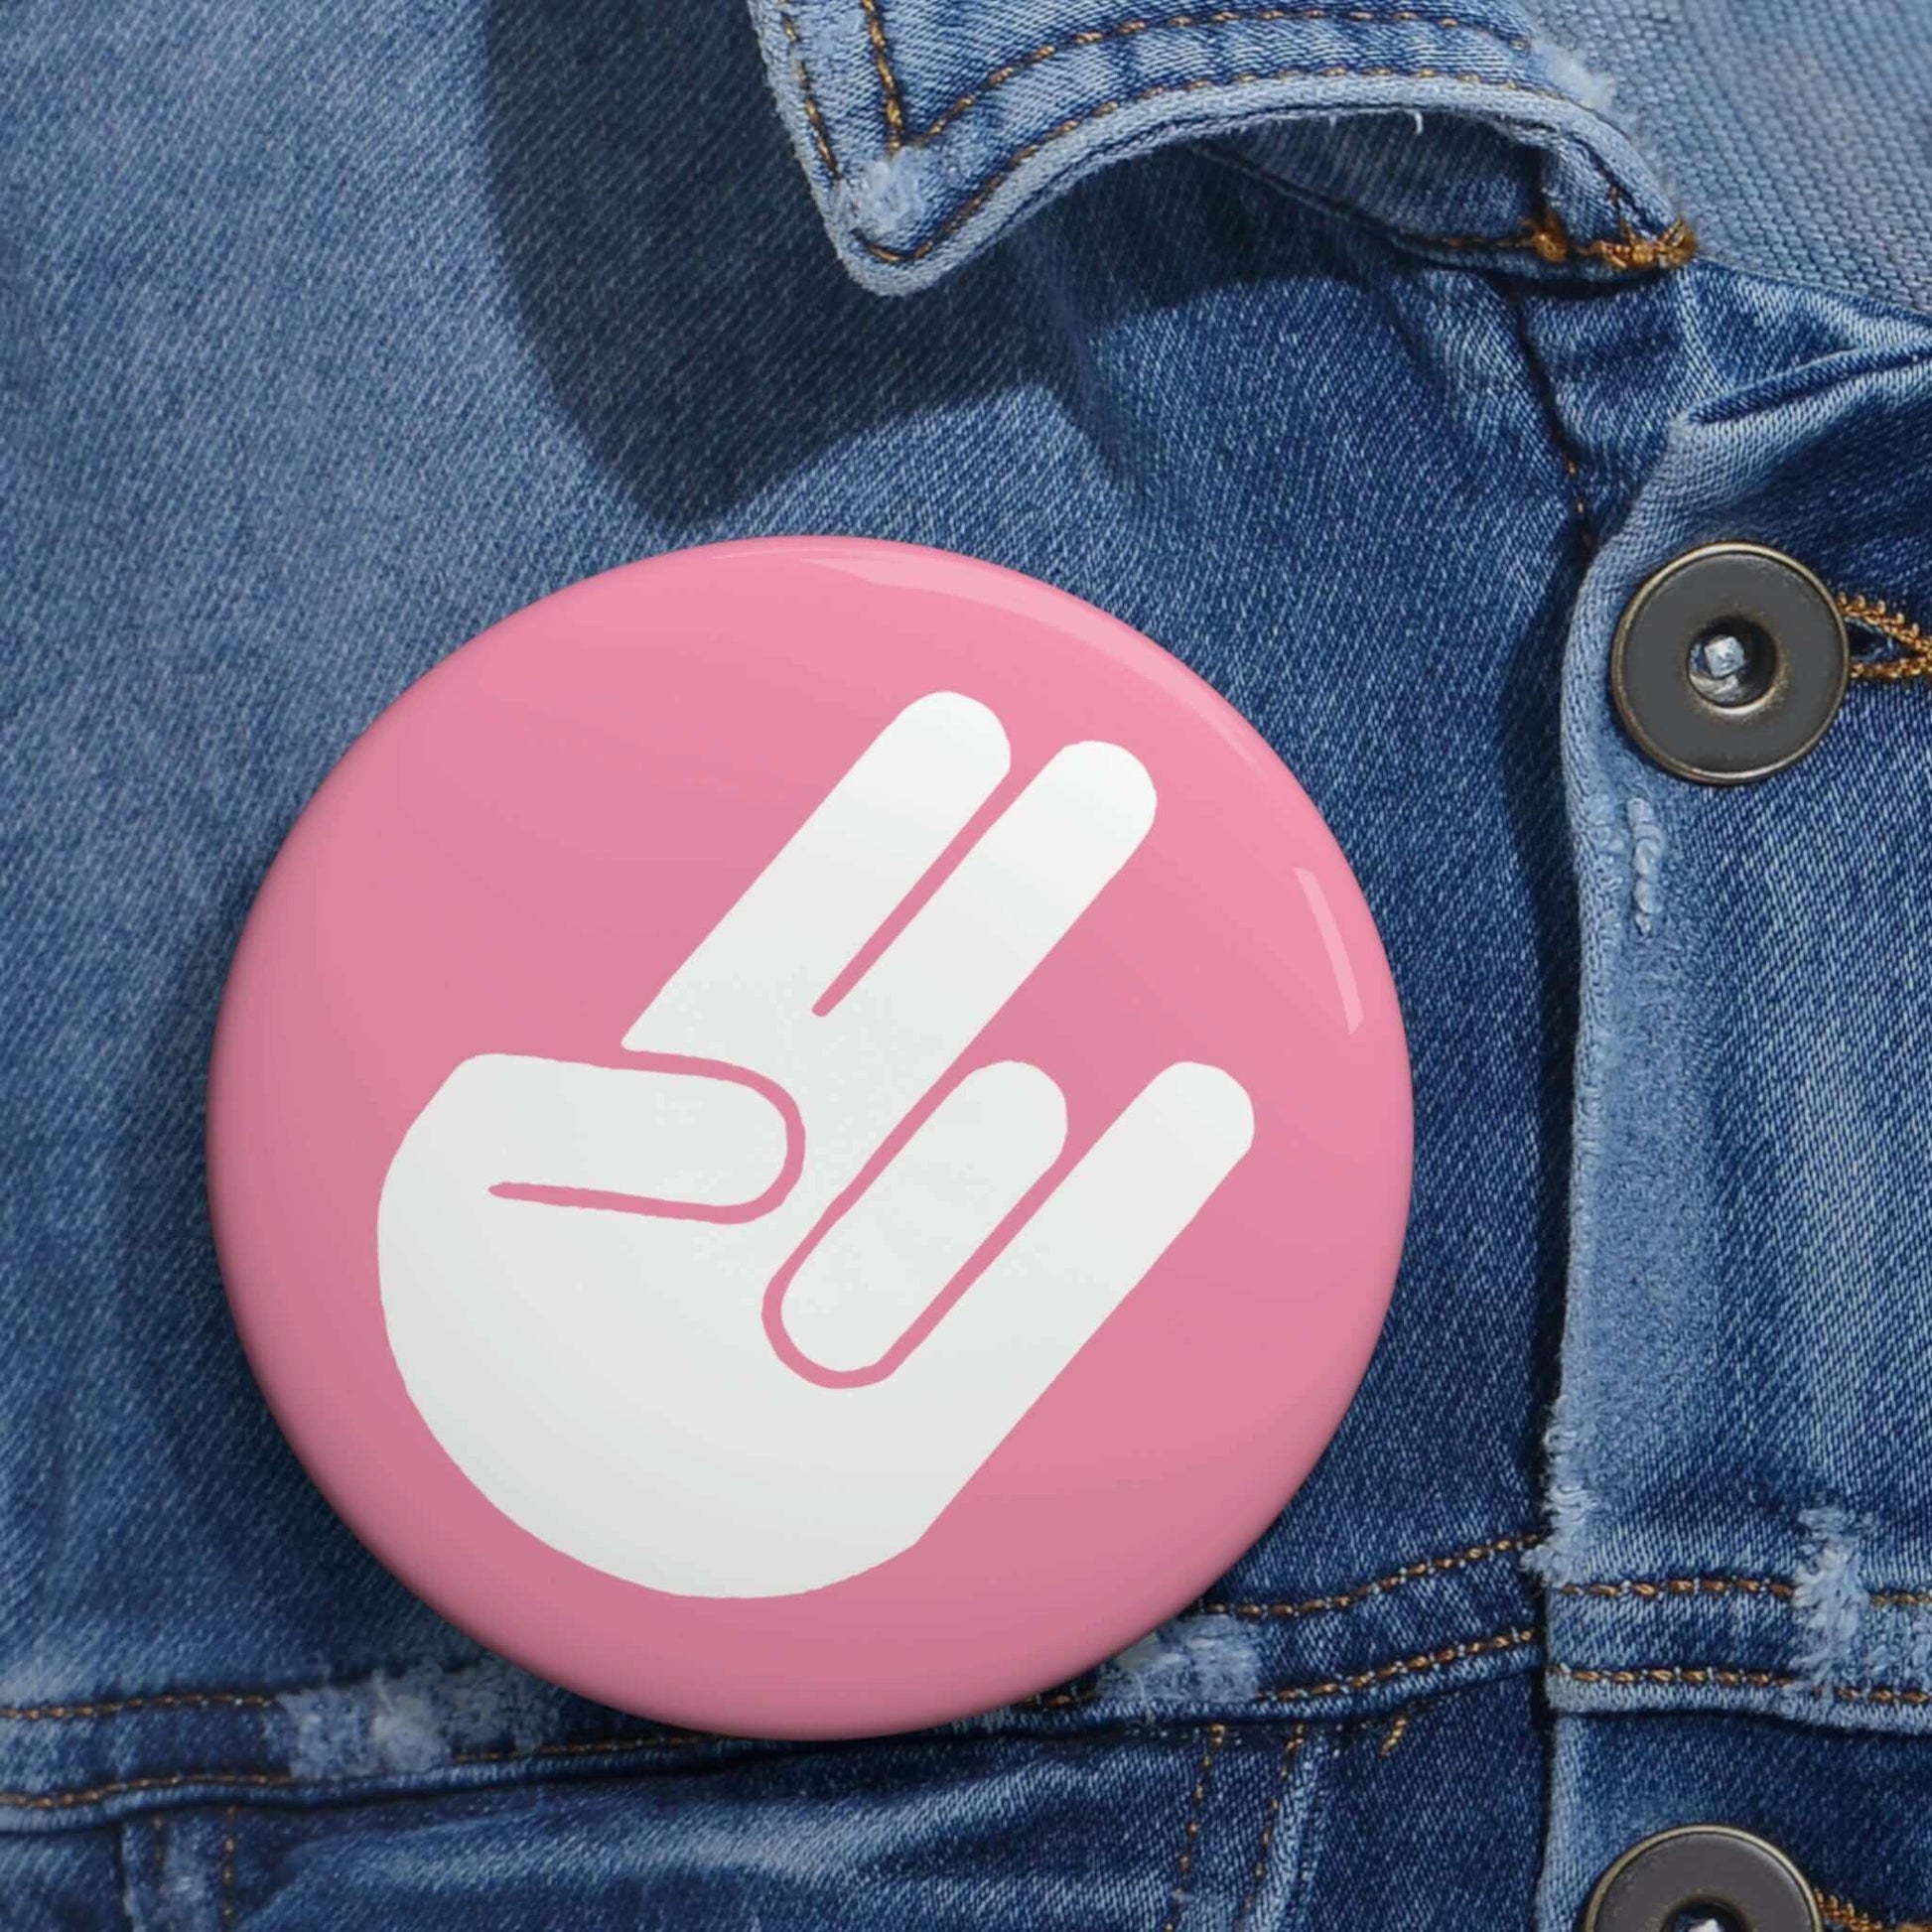 The shocker symbol on pink background pinback button.